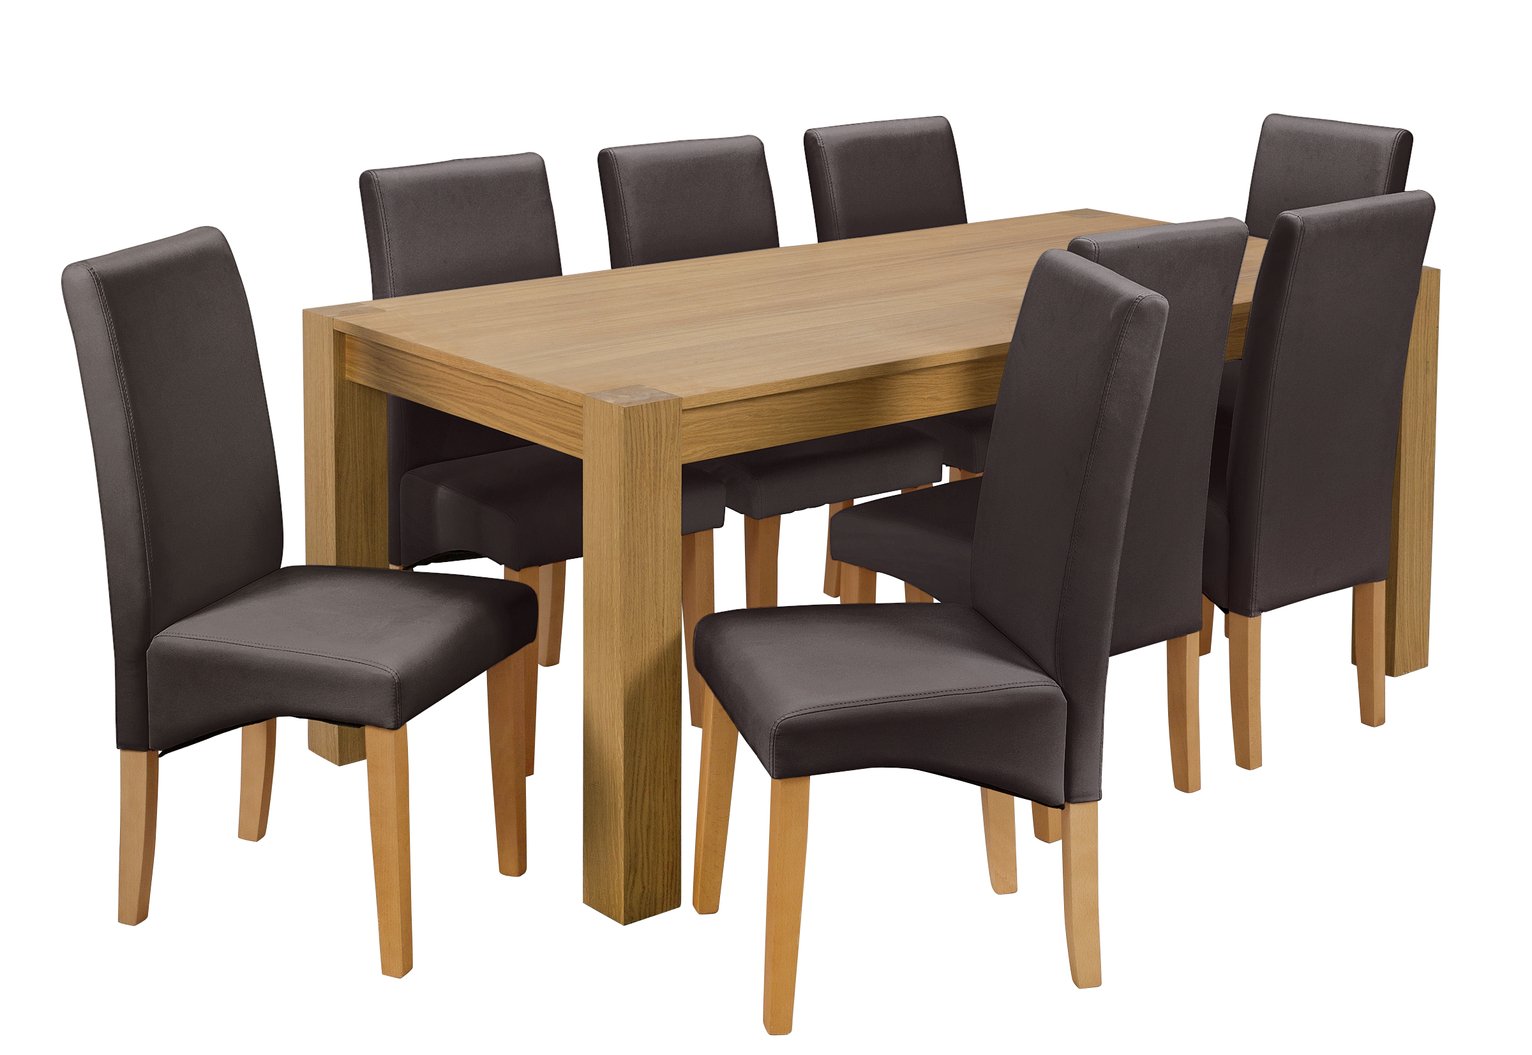 Argos Home Alston Oak Veneer Table and 8 Chairs - Chocolate